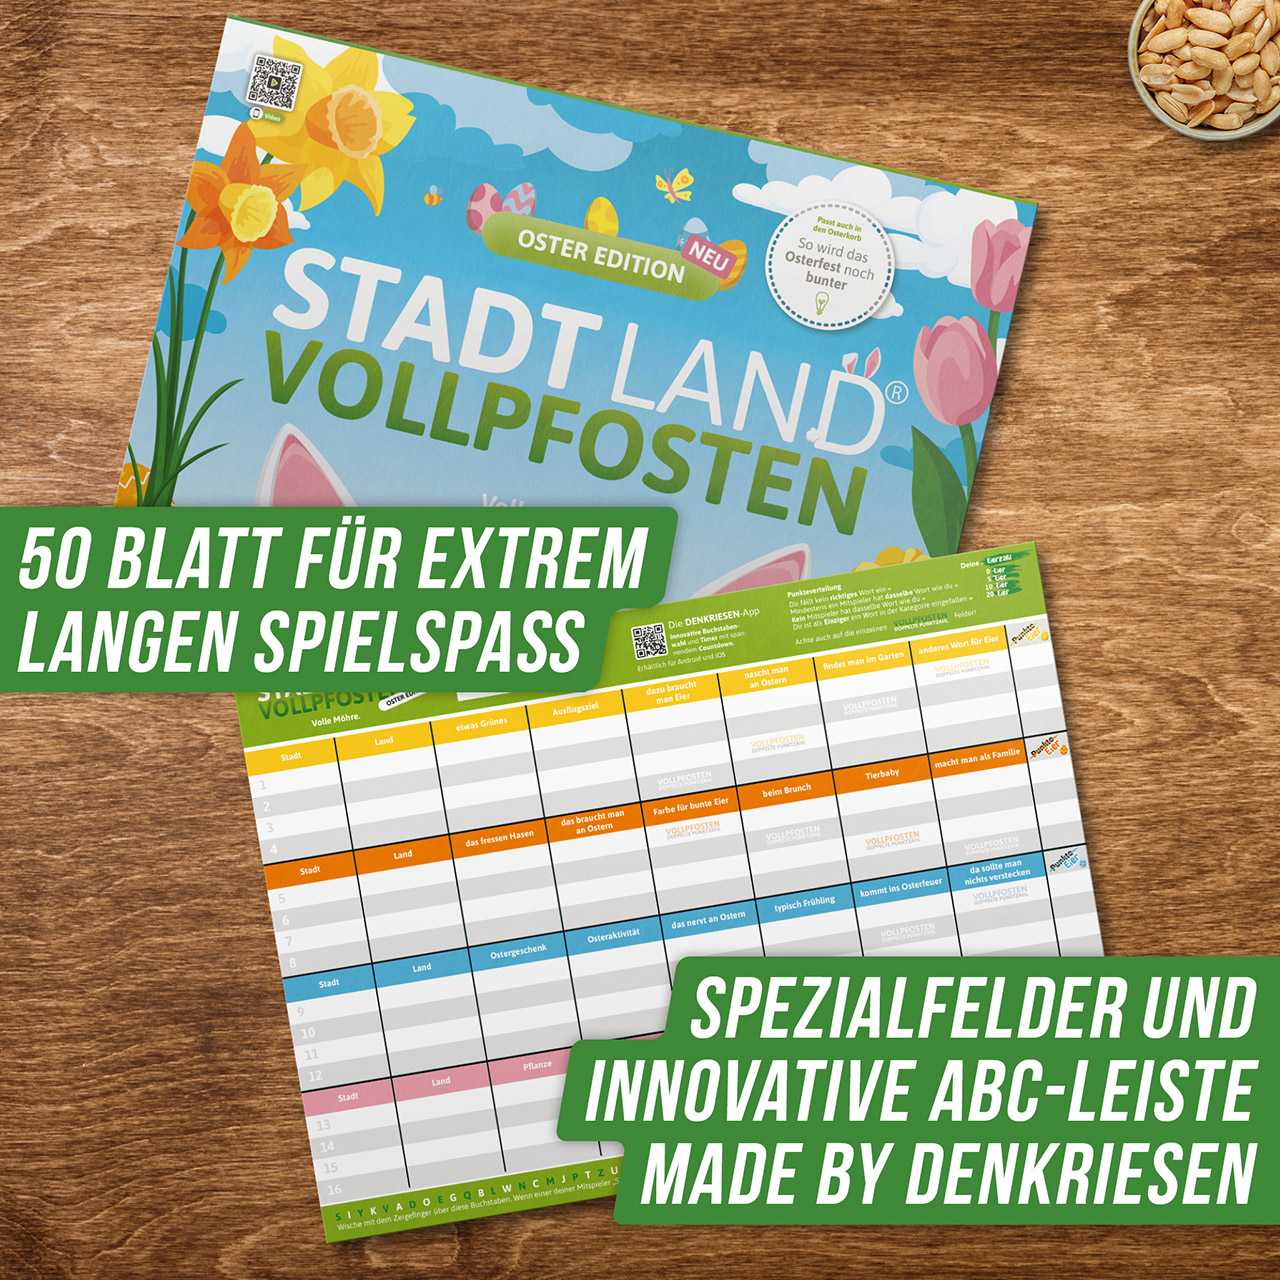 Stadt Land Vollpfosten- Oster Edition A4 ab 9